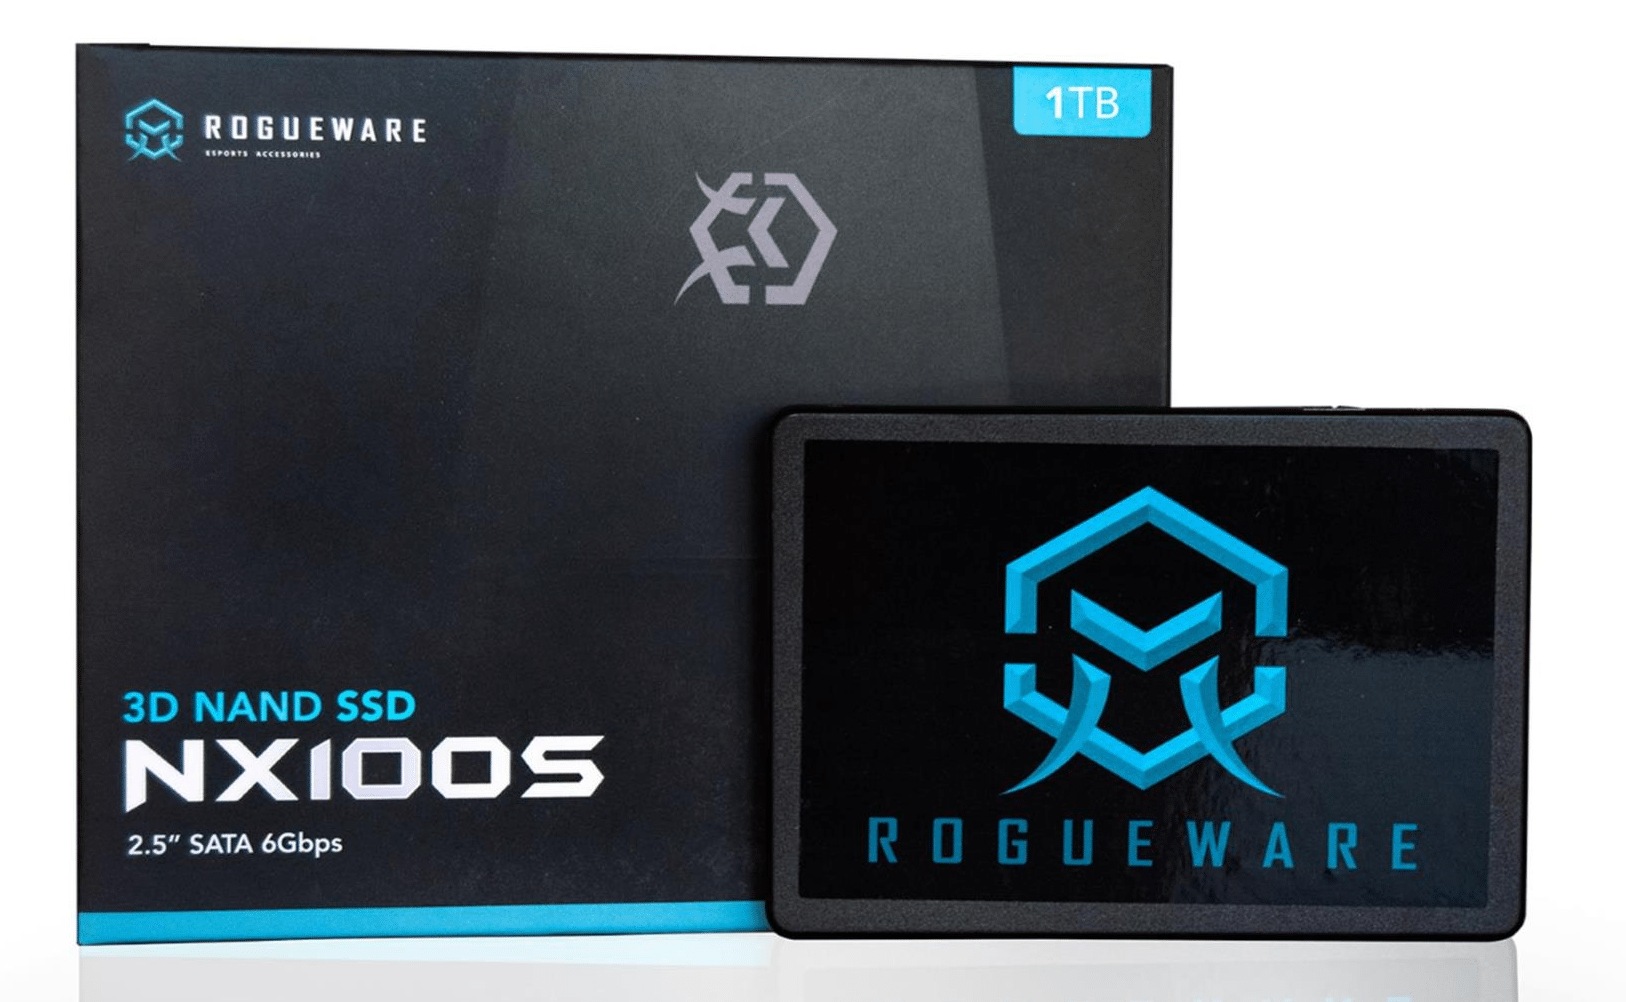 Rogueware NX100S 1TB SATA3 2.5inch 3D NAND SSD